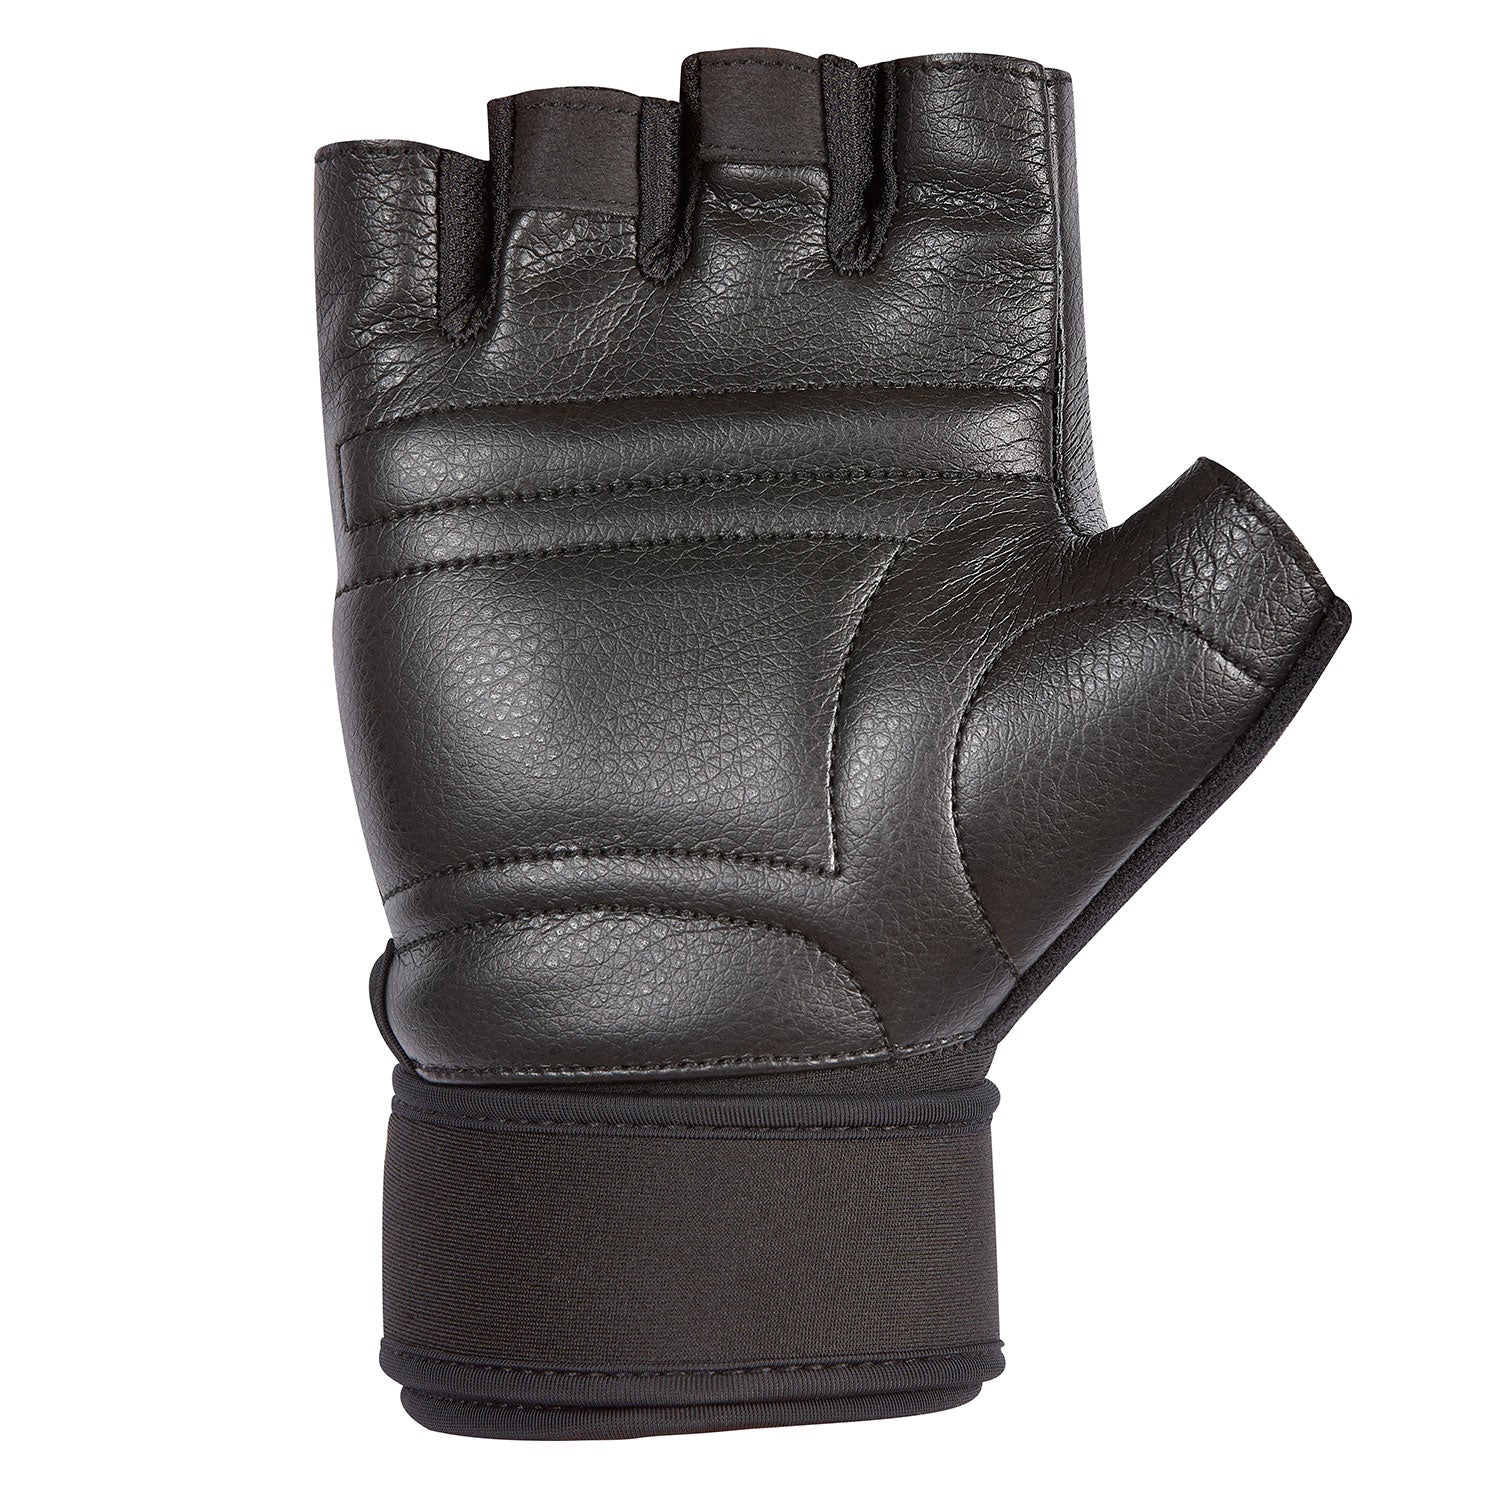 Reebok Lifting Gloves Medium in Black & Red